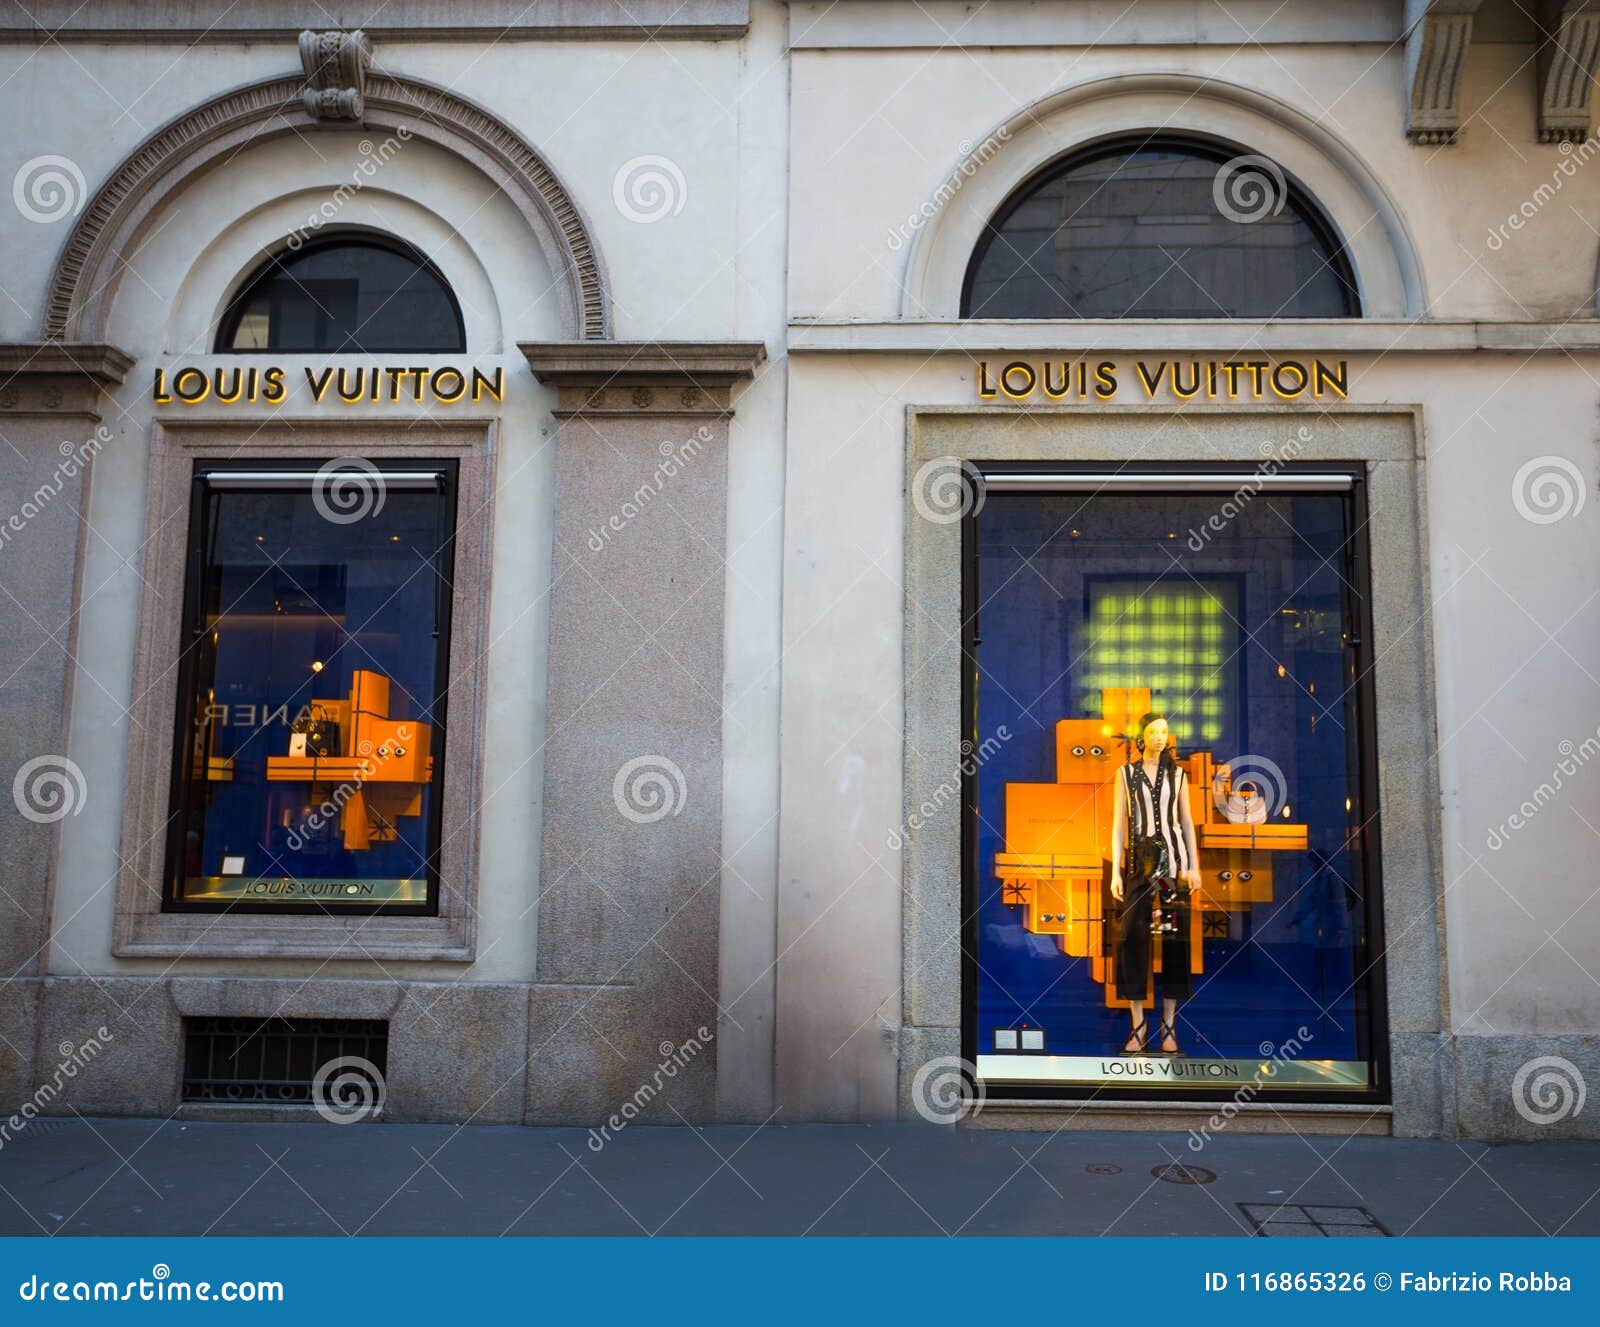 3 Louis Vuitton store in Montenapoleone Street, Milan, the best-known